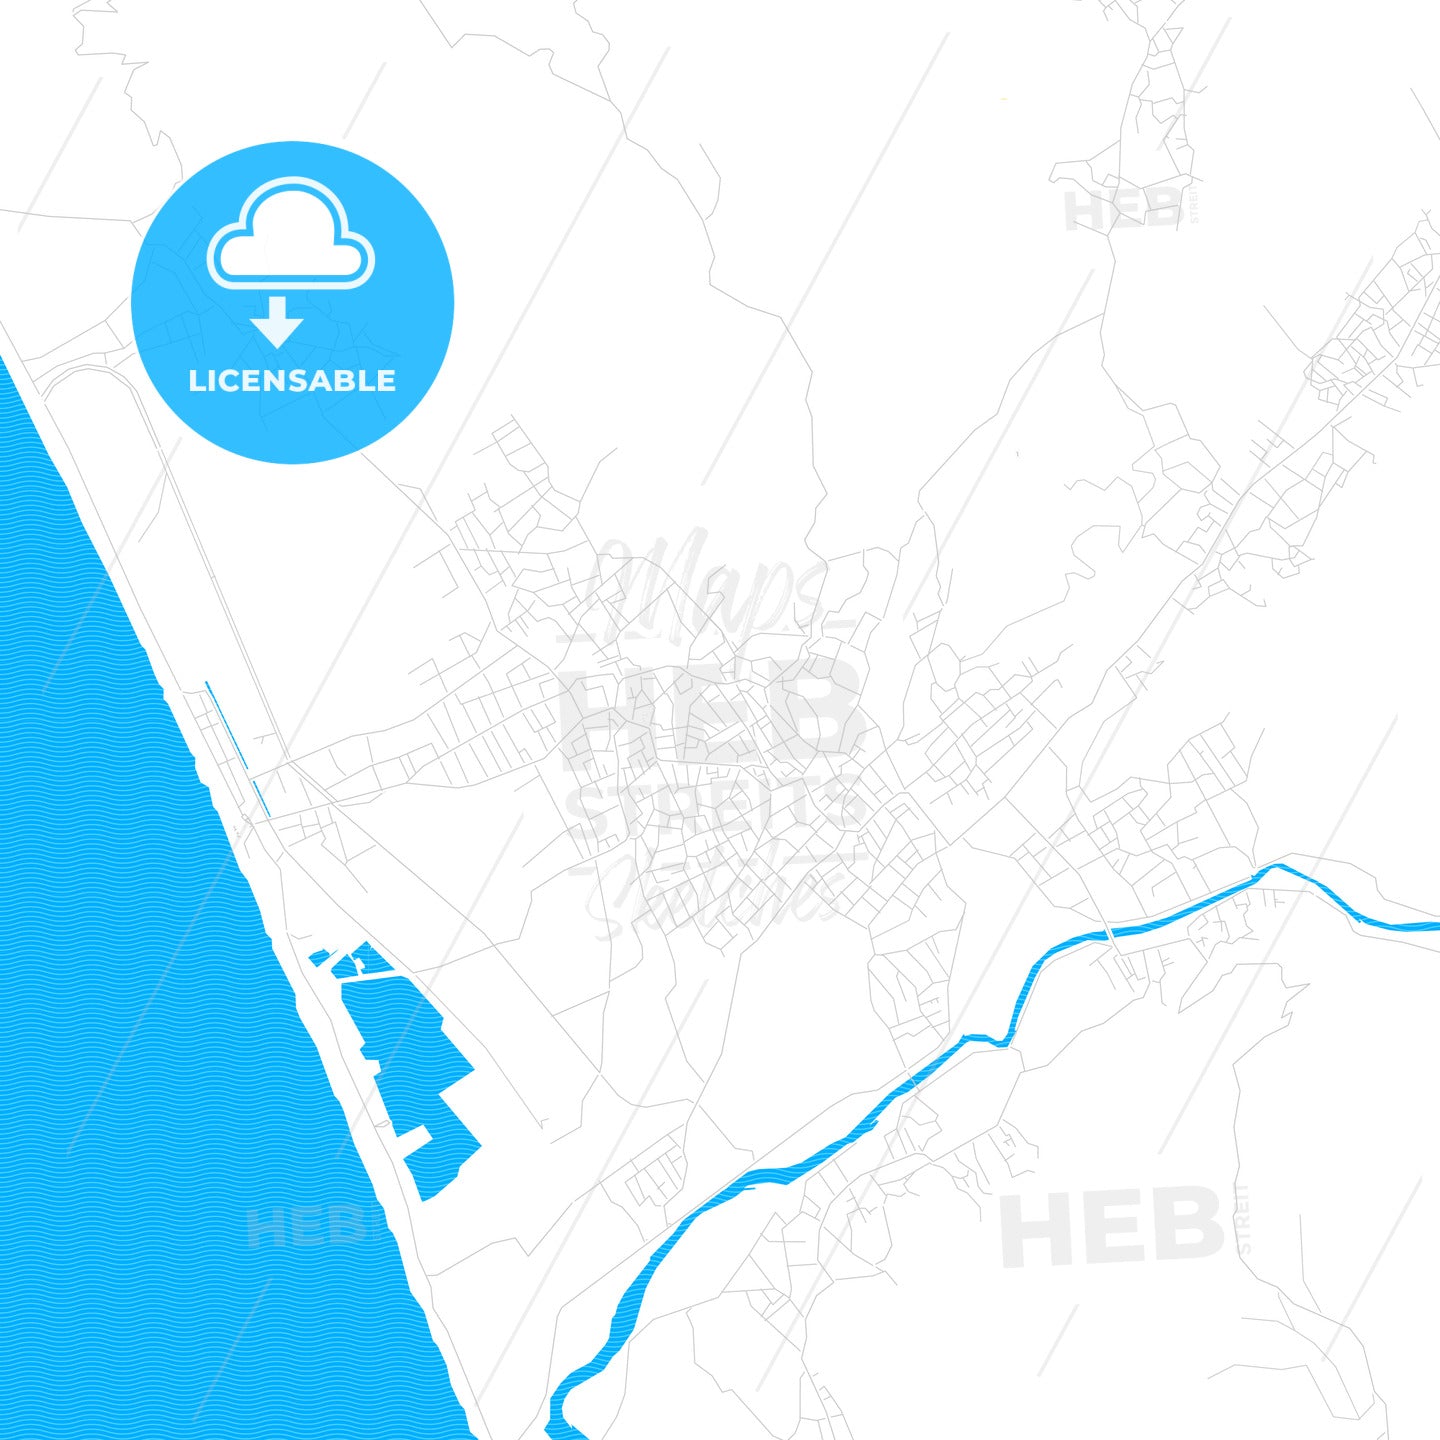 Samandağ, Turkey PDF vector map with water in focus